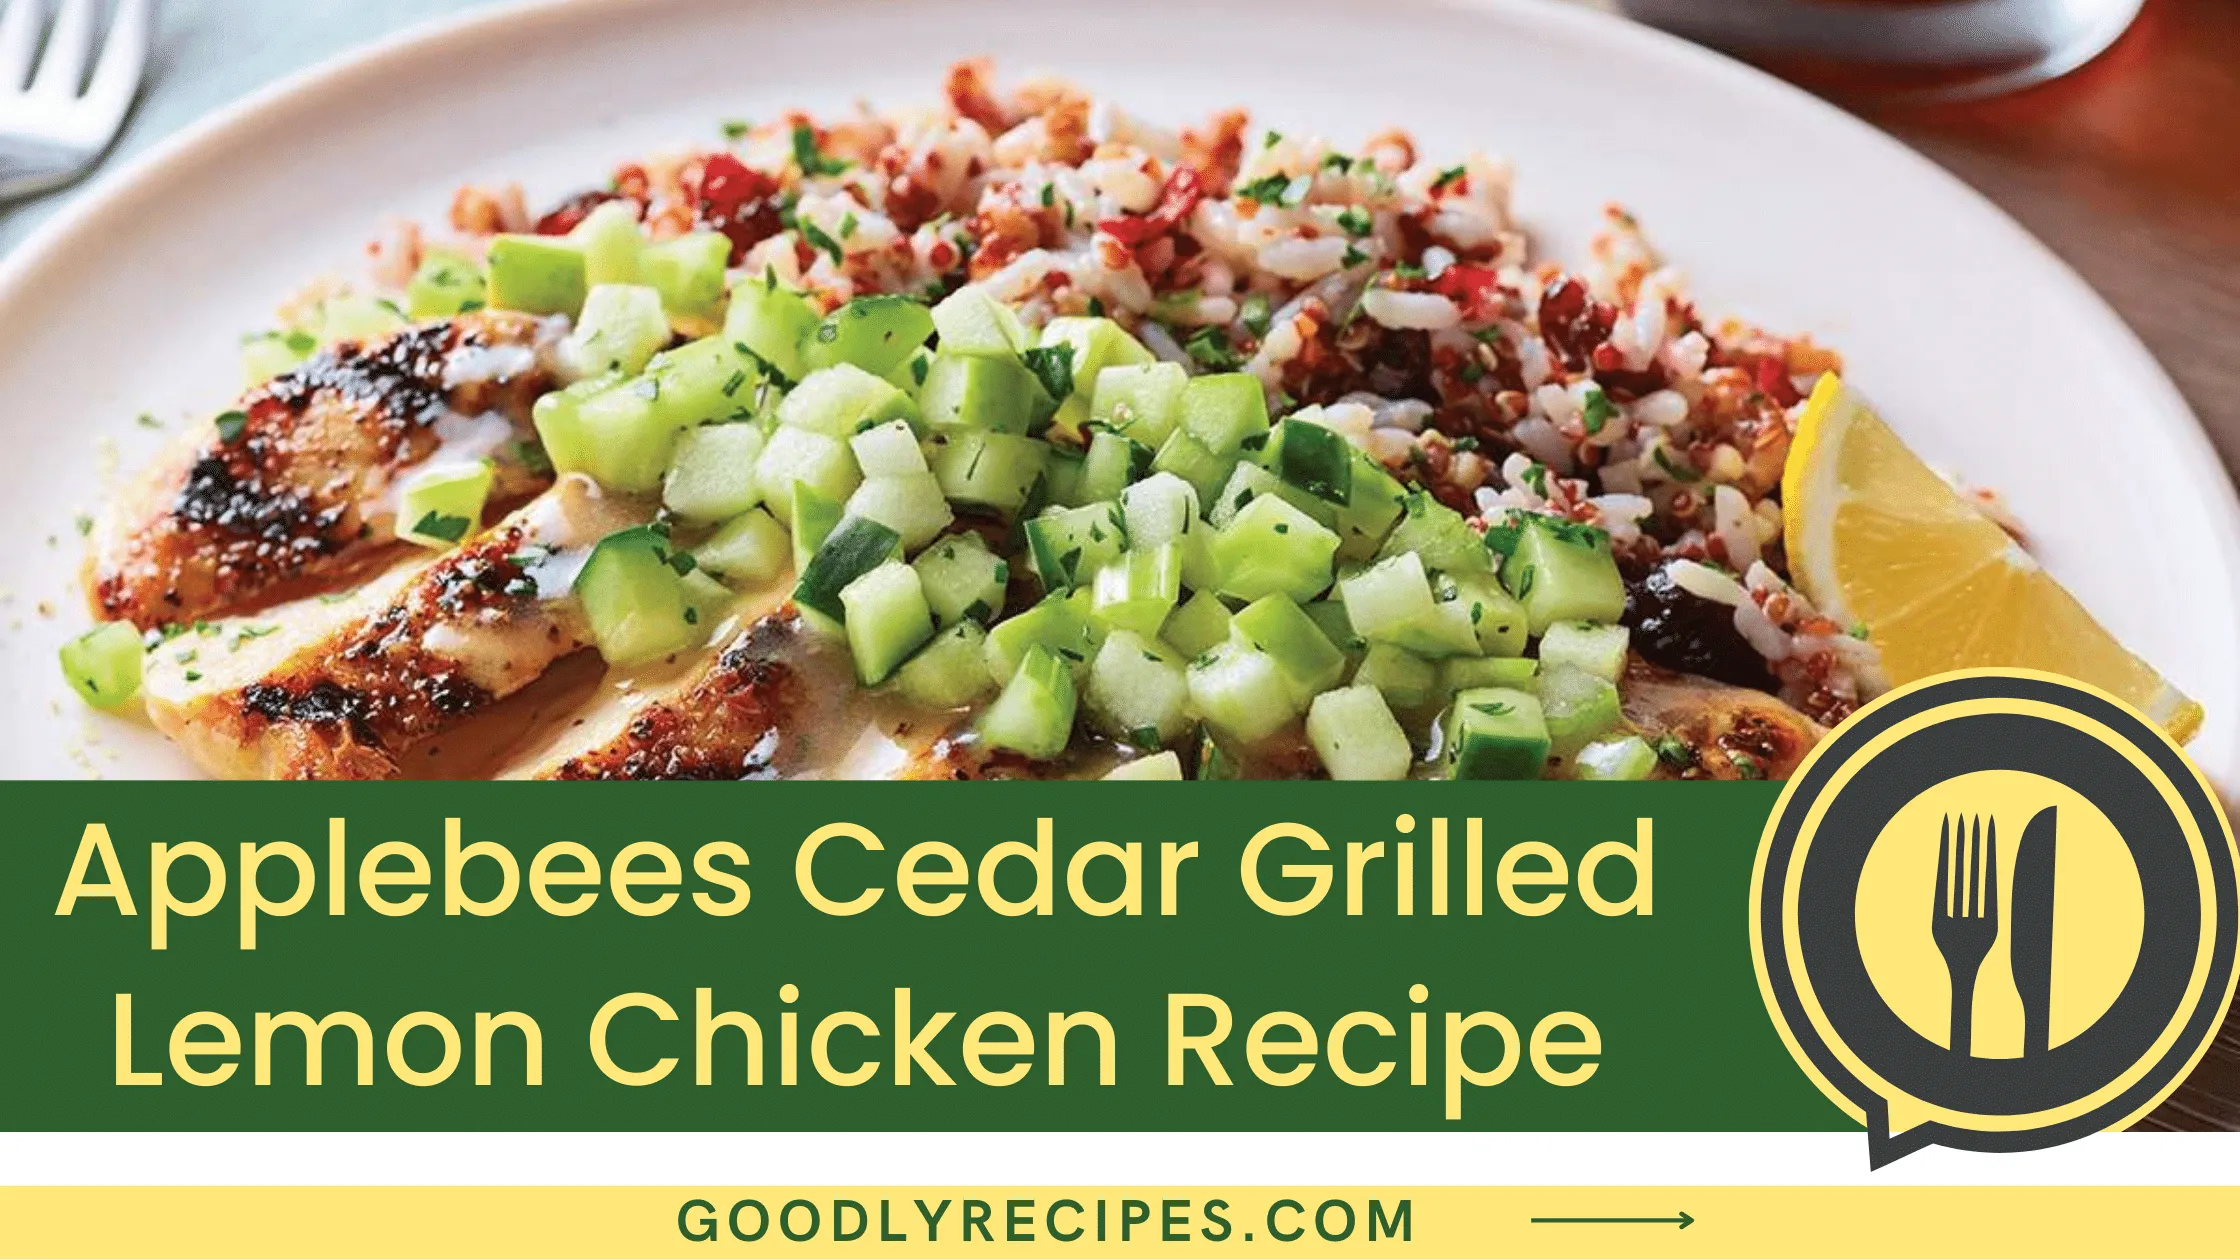 What is Applebees Cedar Grilled Lemon Chicken?